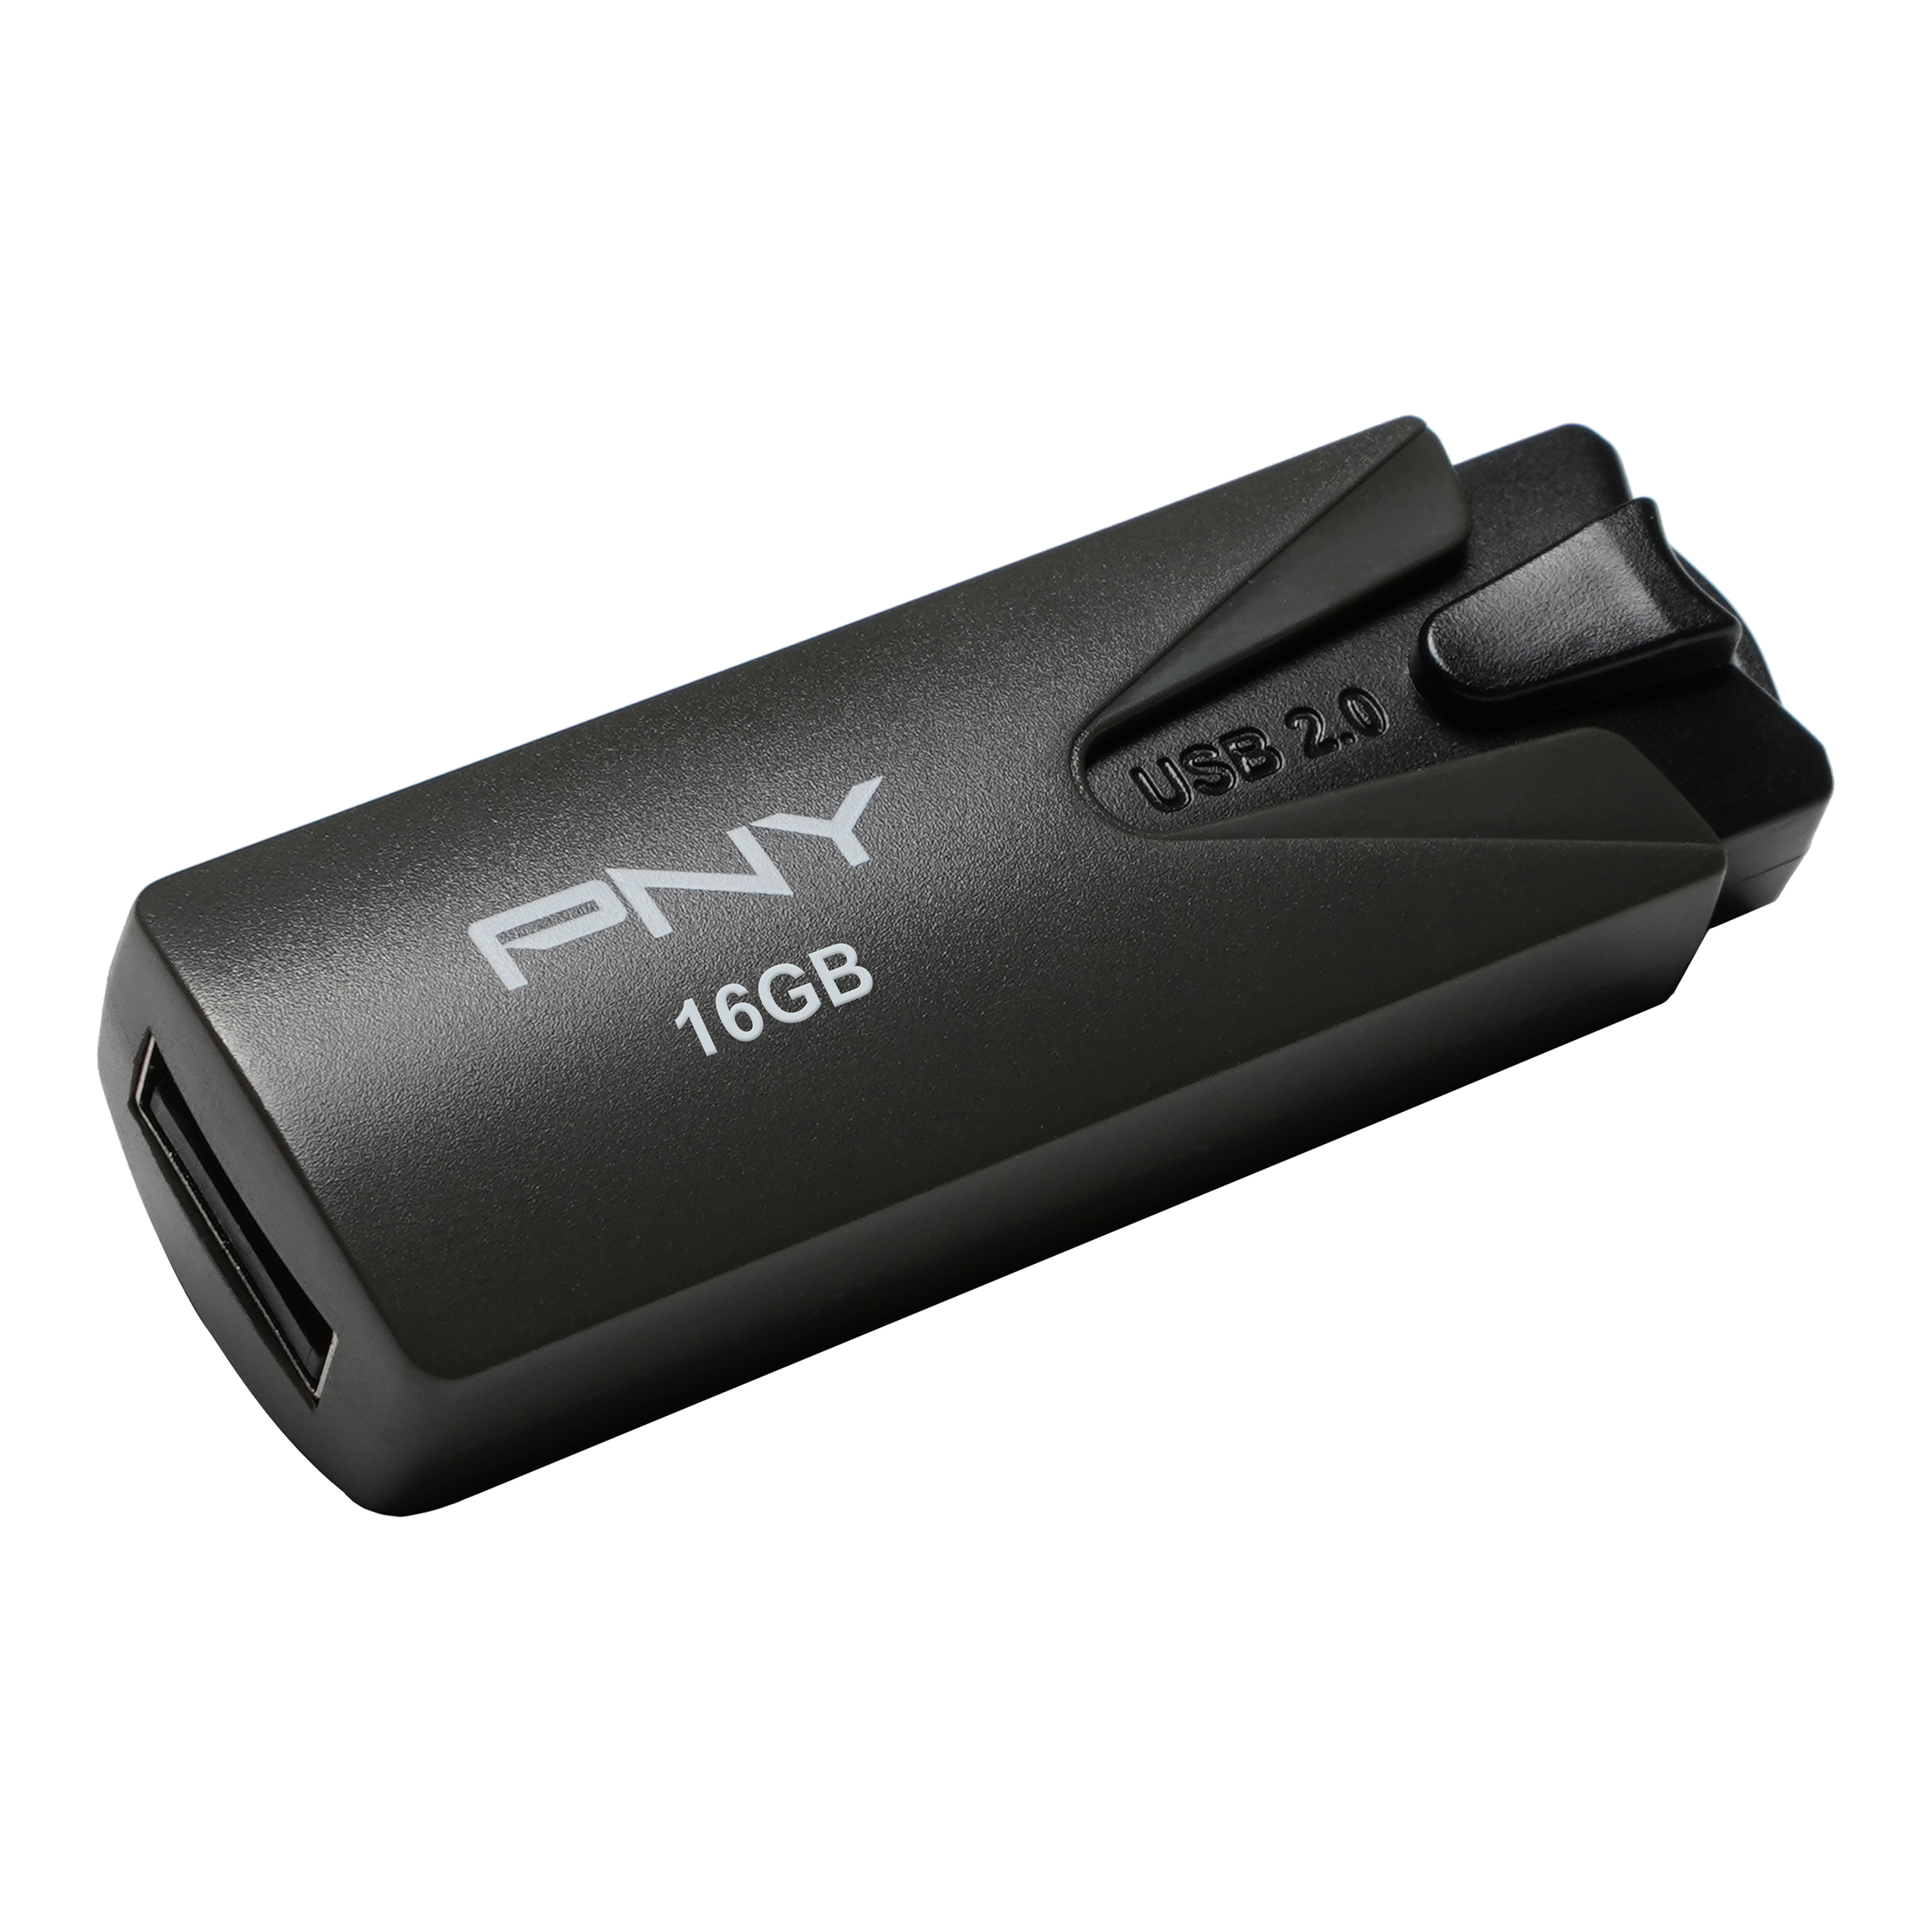 PNY 16GB Attache USB 2.0 Flash Drive - image 1 of 8